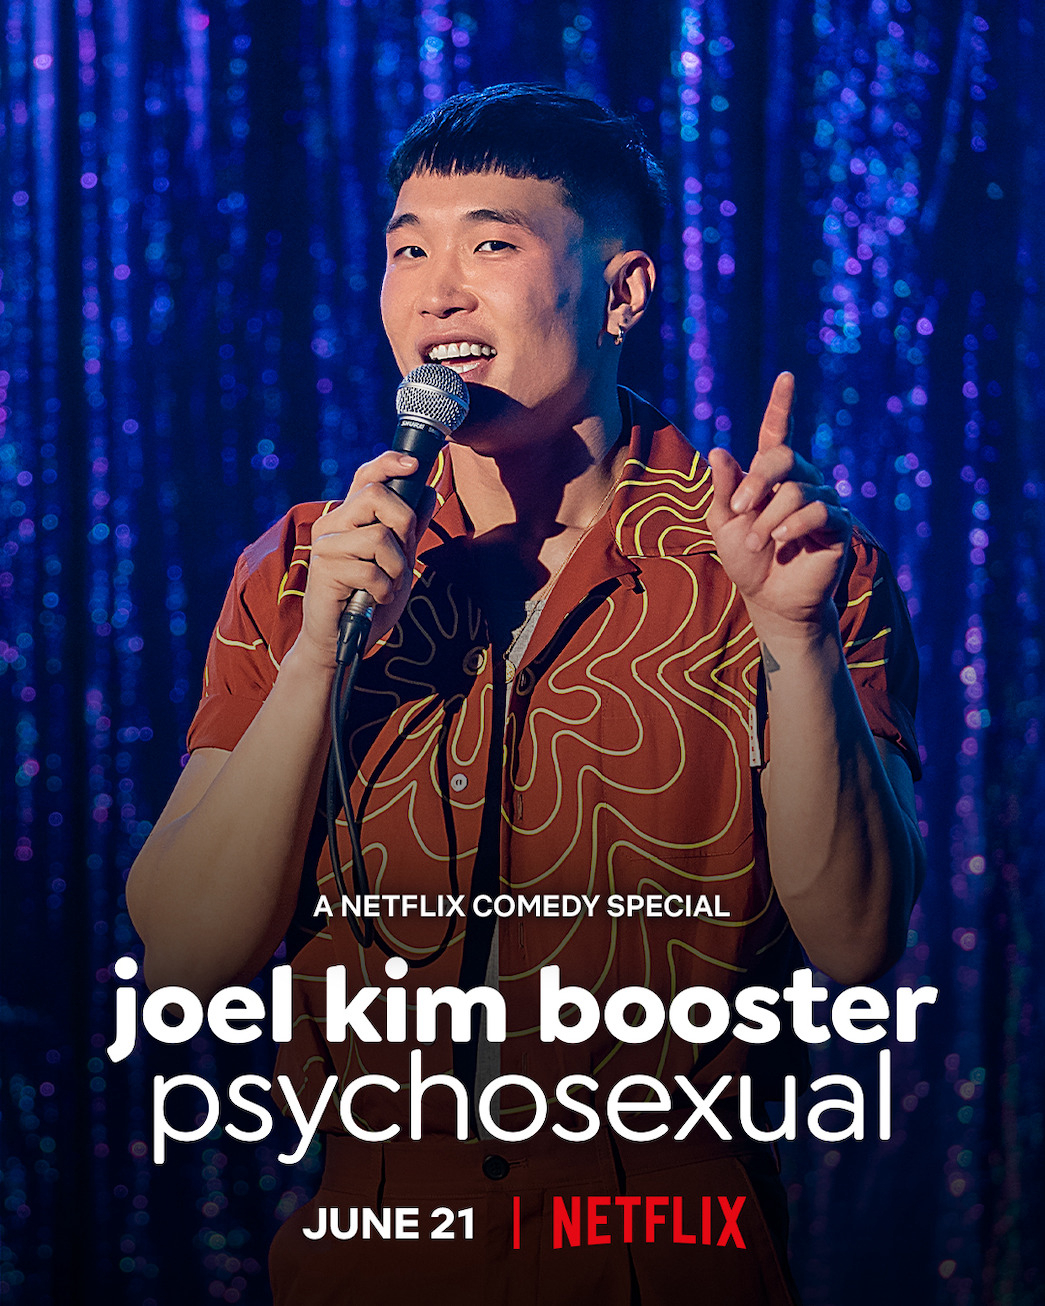 Poster Phim Joel Kim Booster: Tâm tính dục (Joel Kim Booster: Psychosexual)